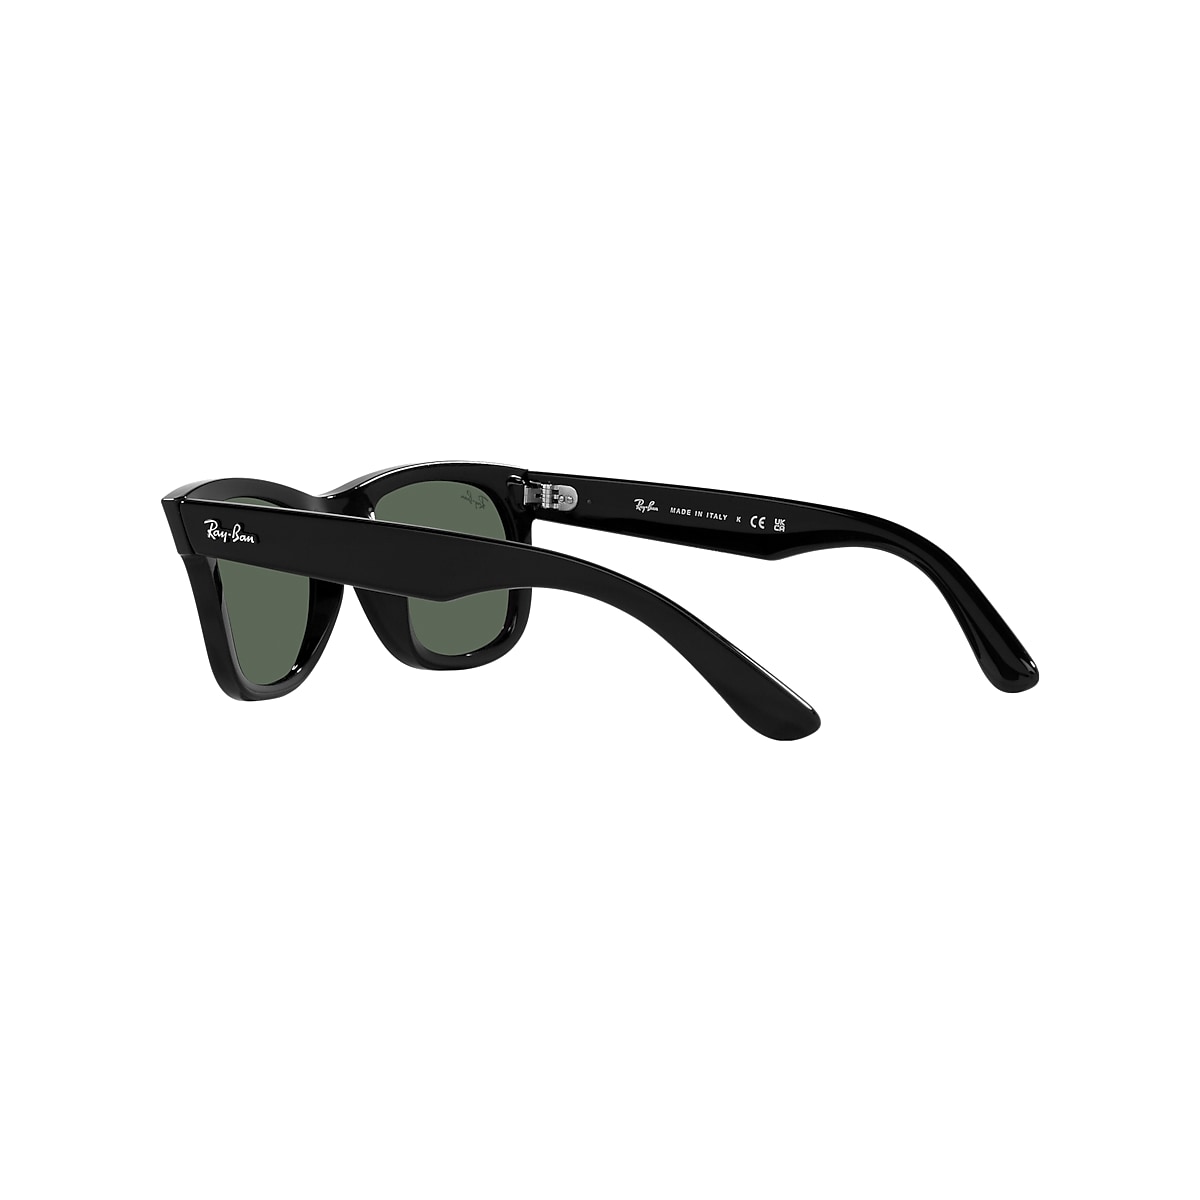 WAYFARER REVERSE Sunglasses in Black and Green - Ray-Ban